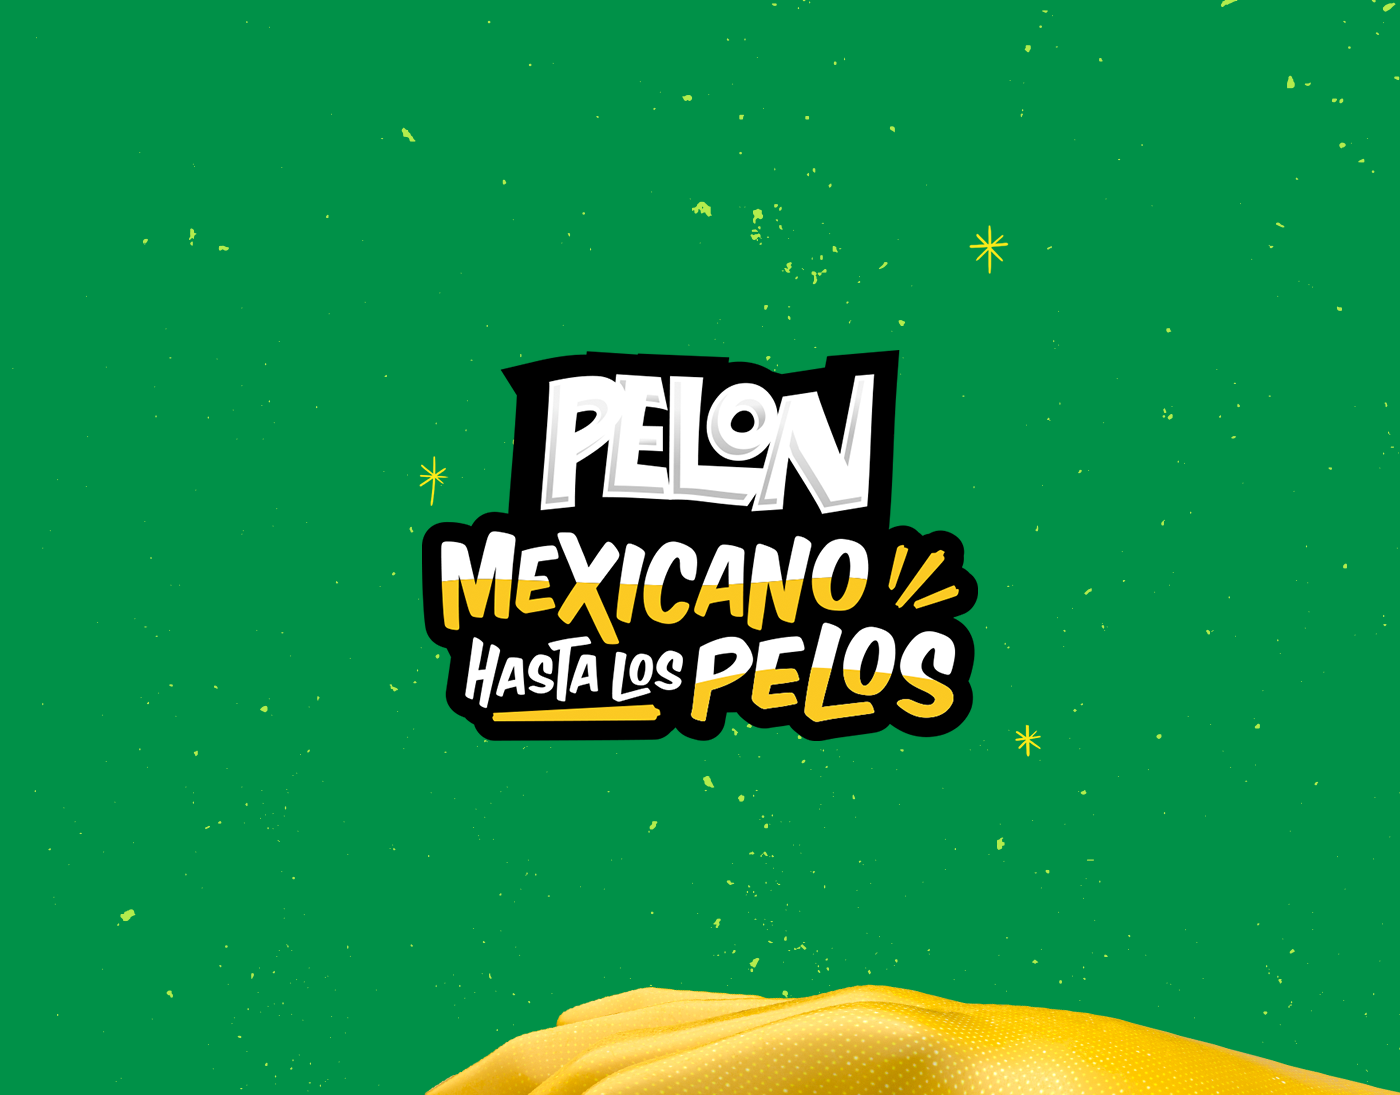 albur Candy diseño Dulce hershey's Mexicano pelon pelos Picoso spicy